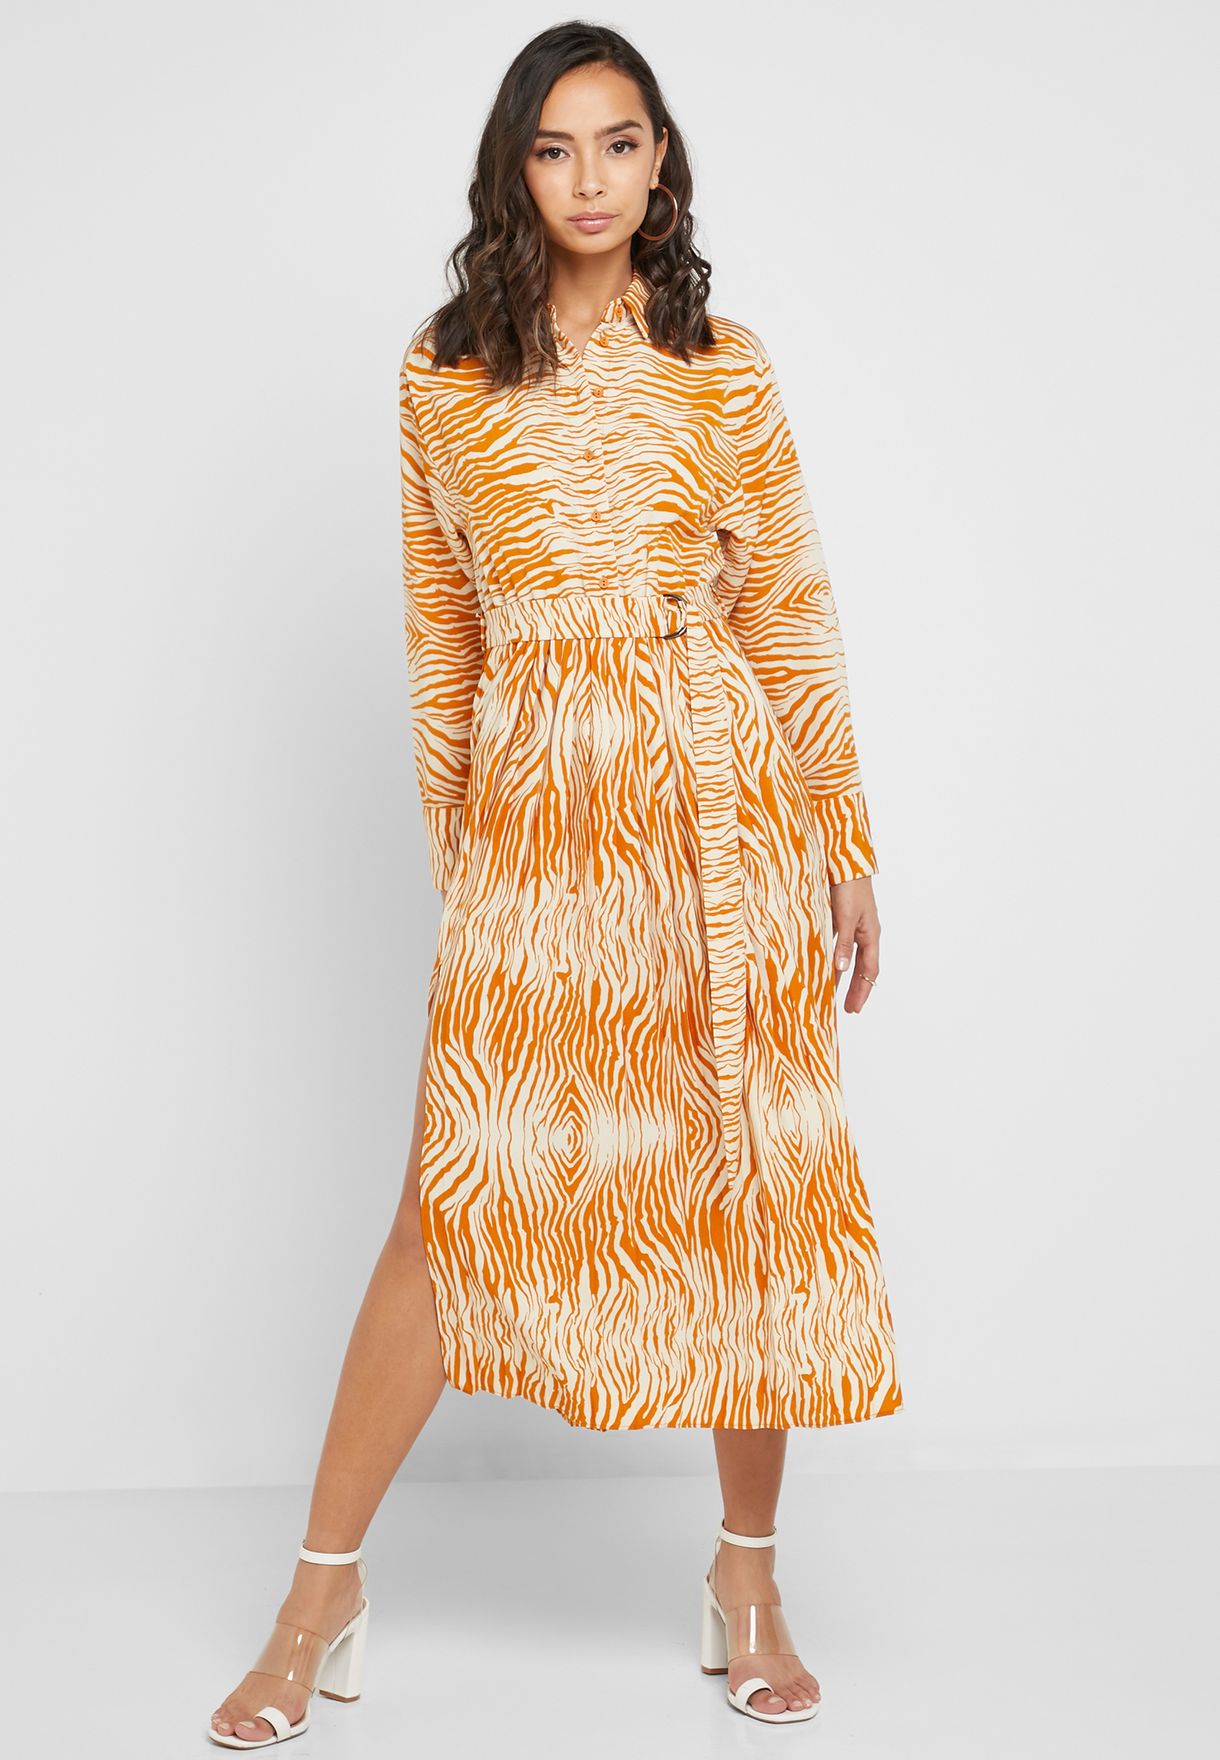 topshop zebra print dress